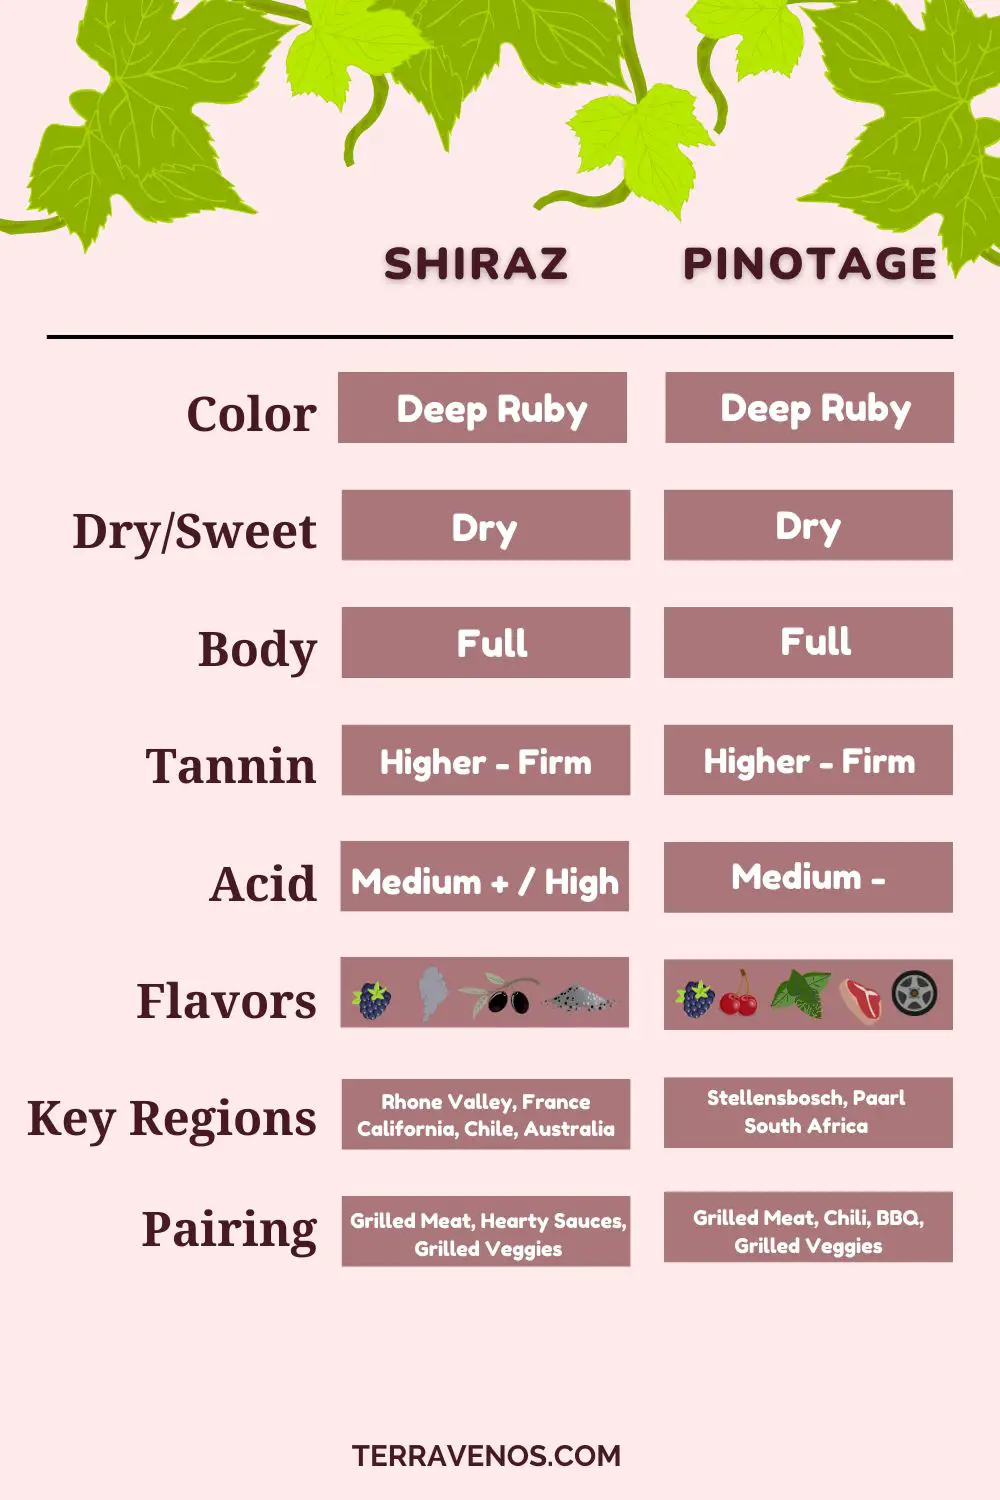 pinotage vs shiraz infographic